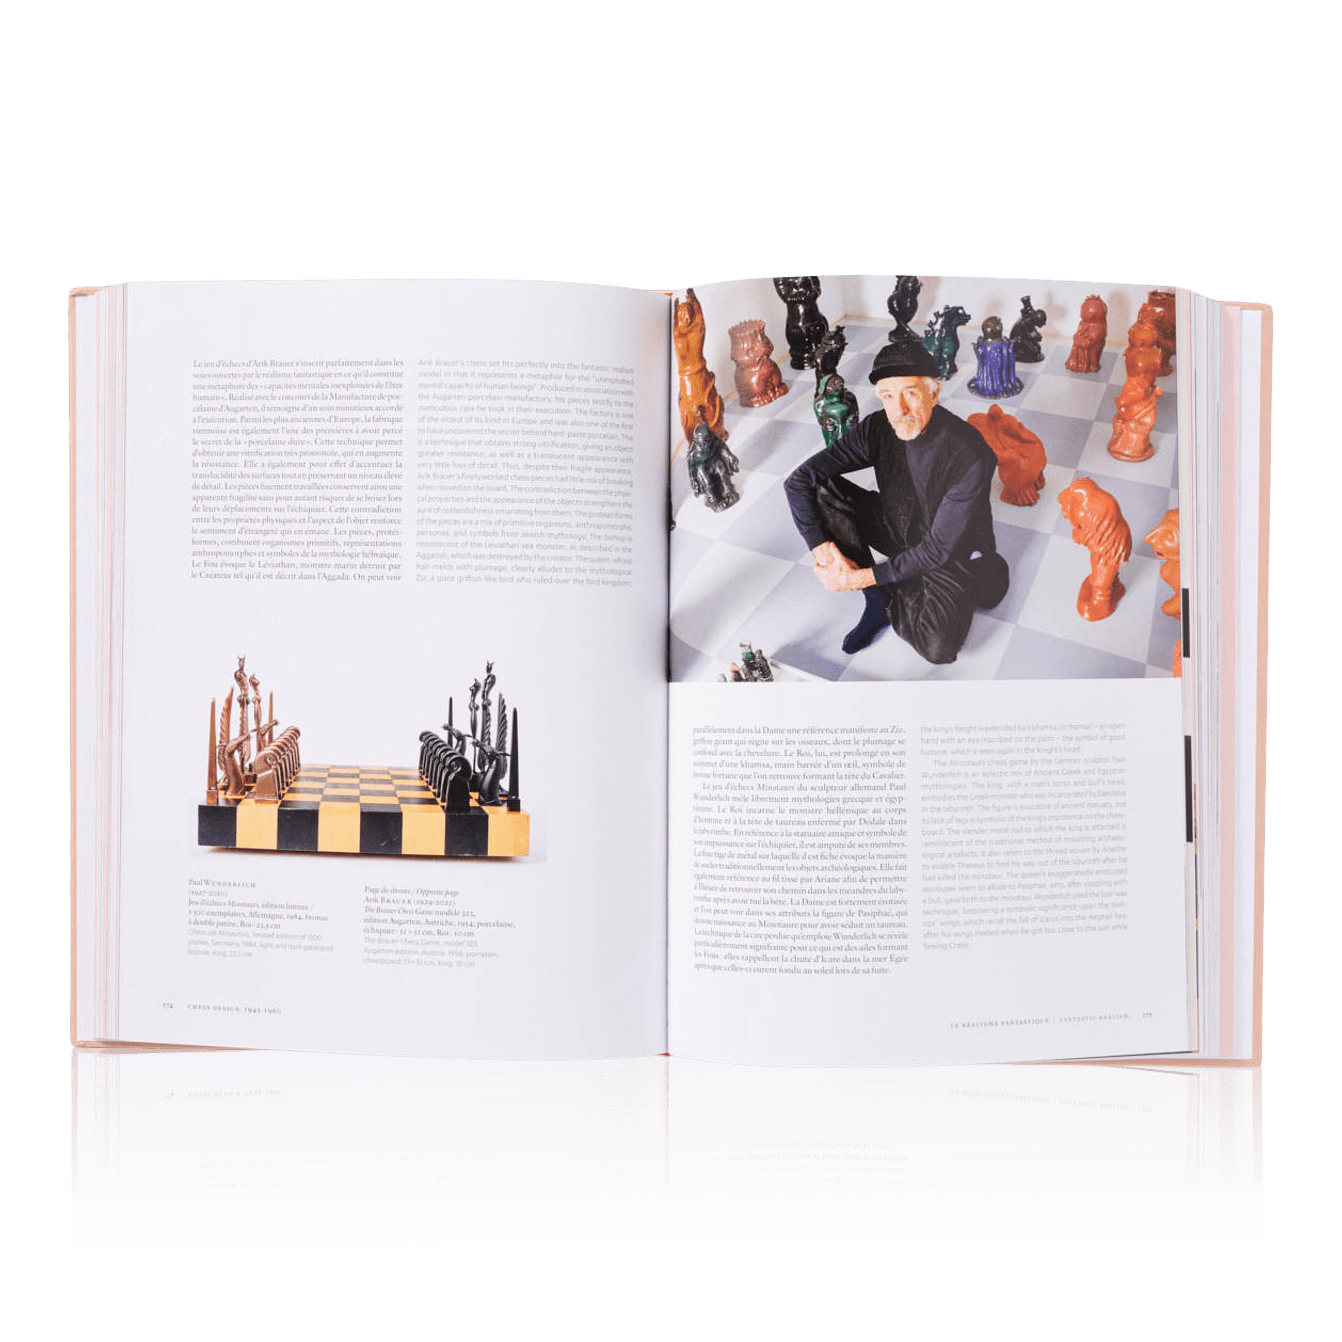 Chess Design